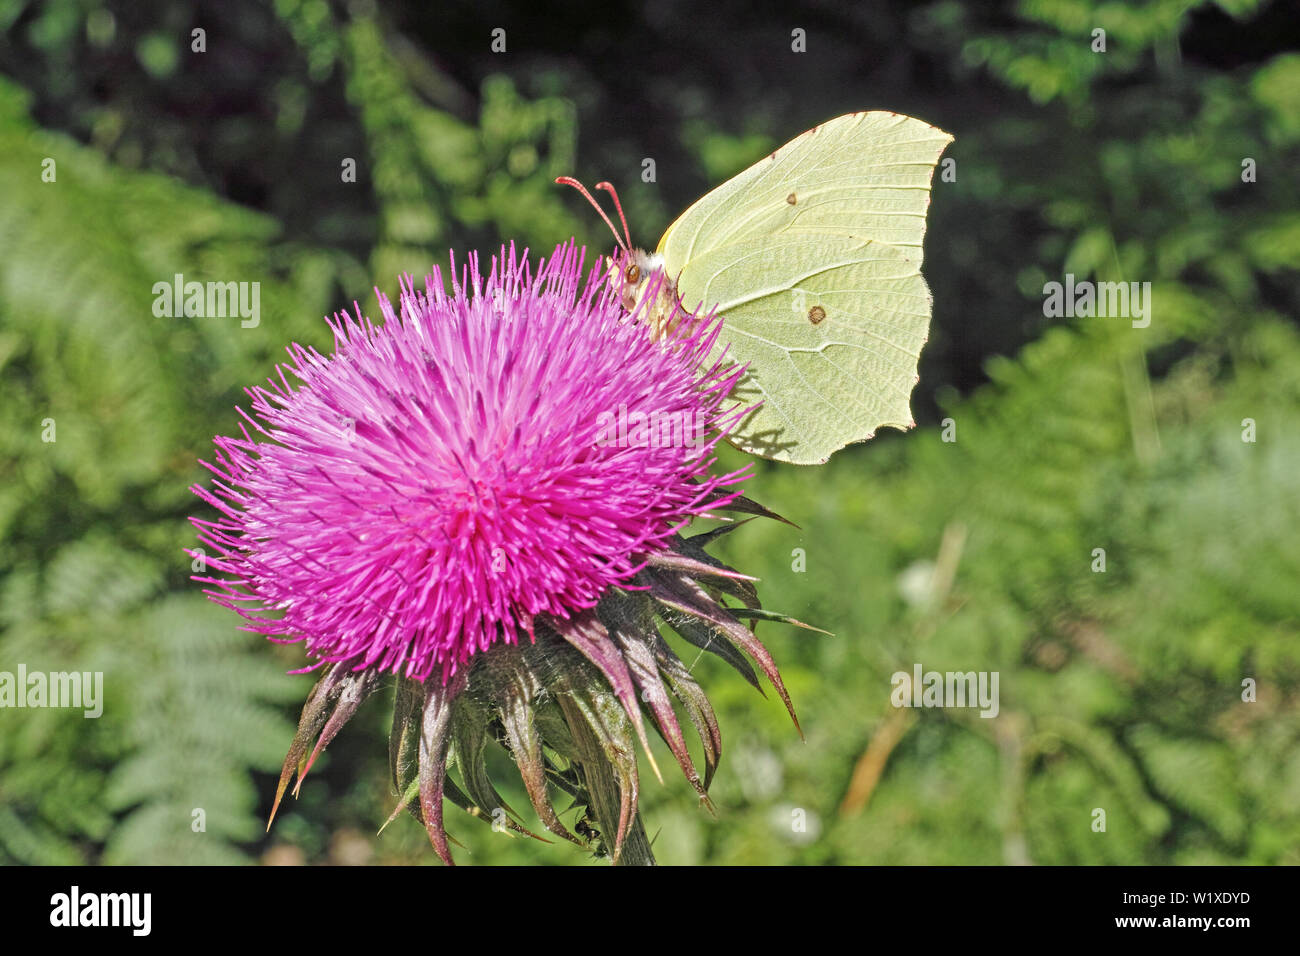 common brimstone moth evokes the nectar of a thistle flower Stock Photo